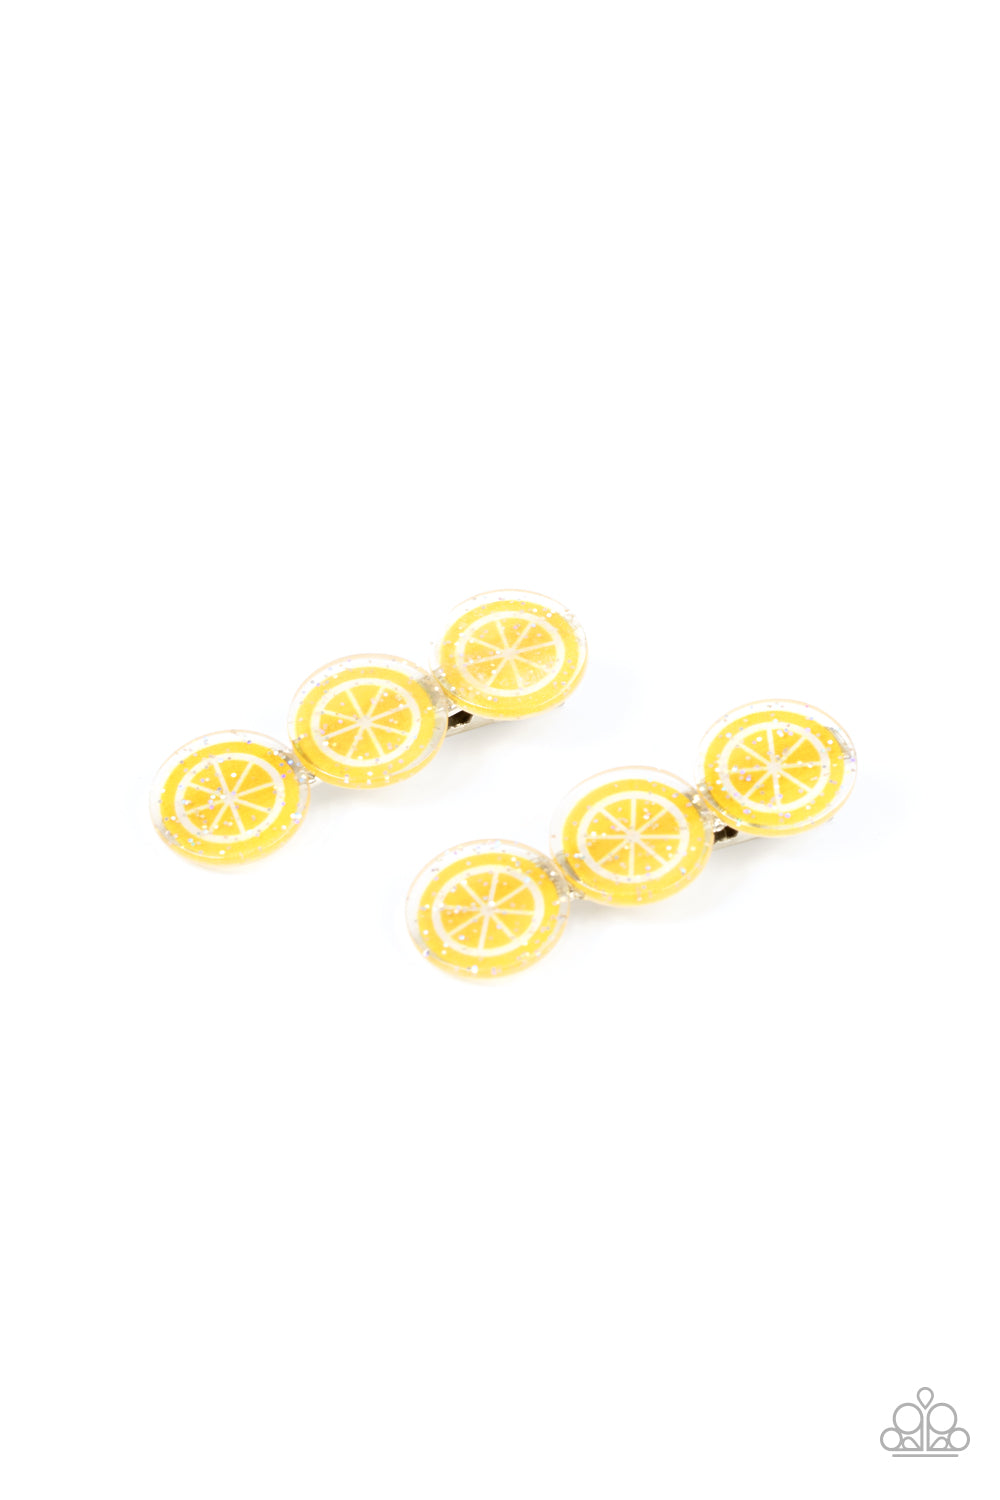 Charismatically Citrus - Yellow